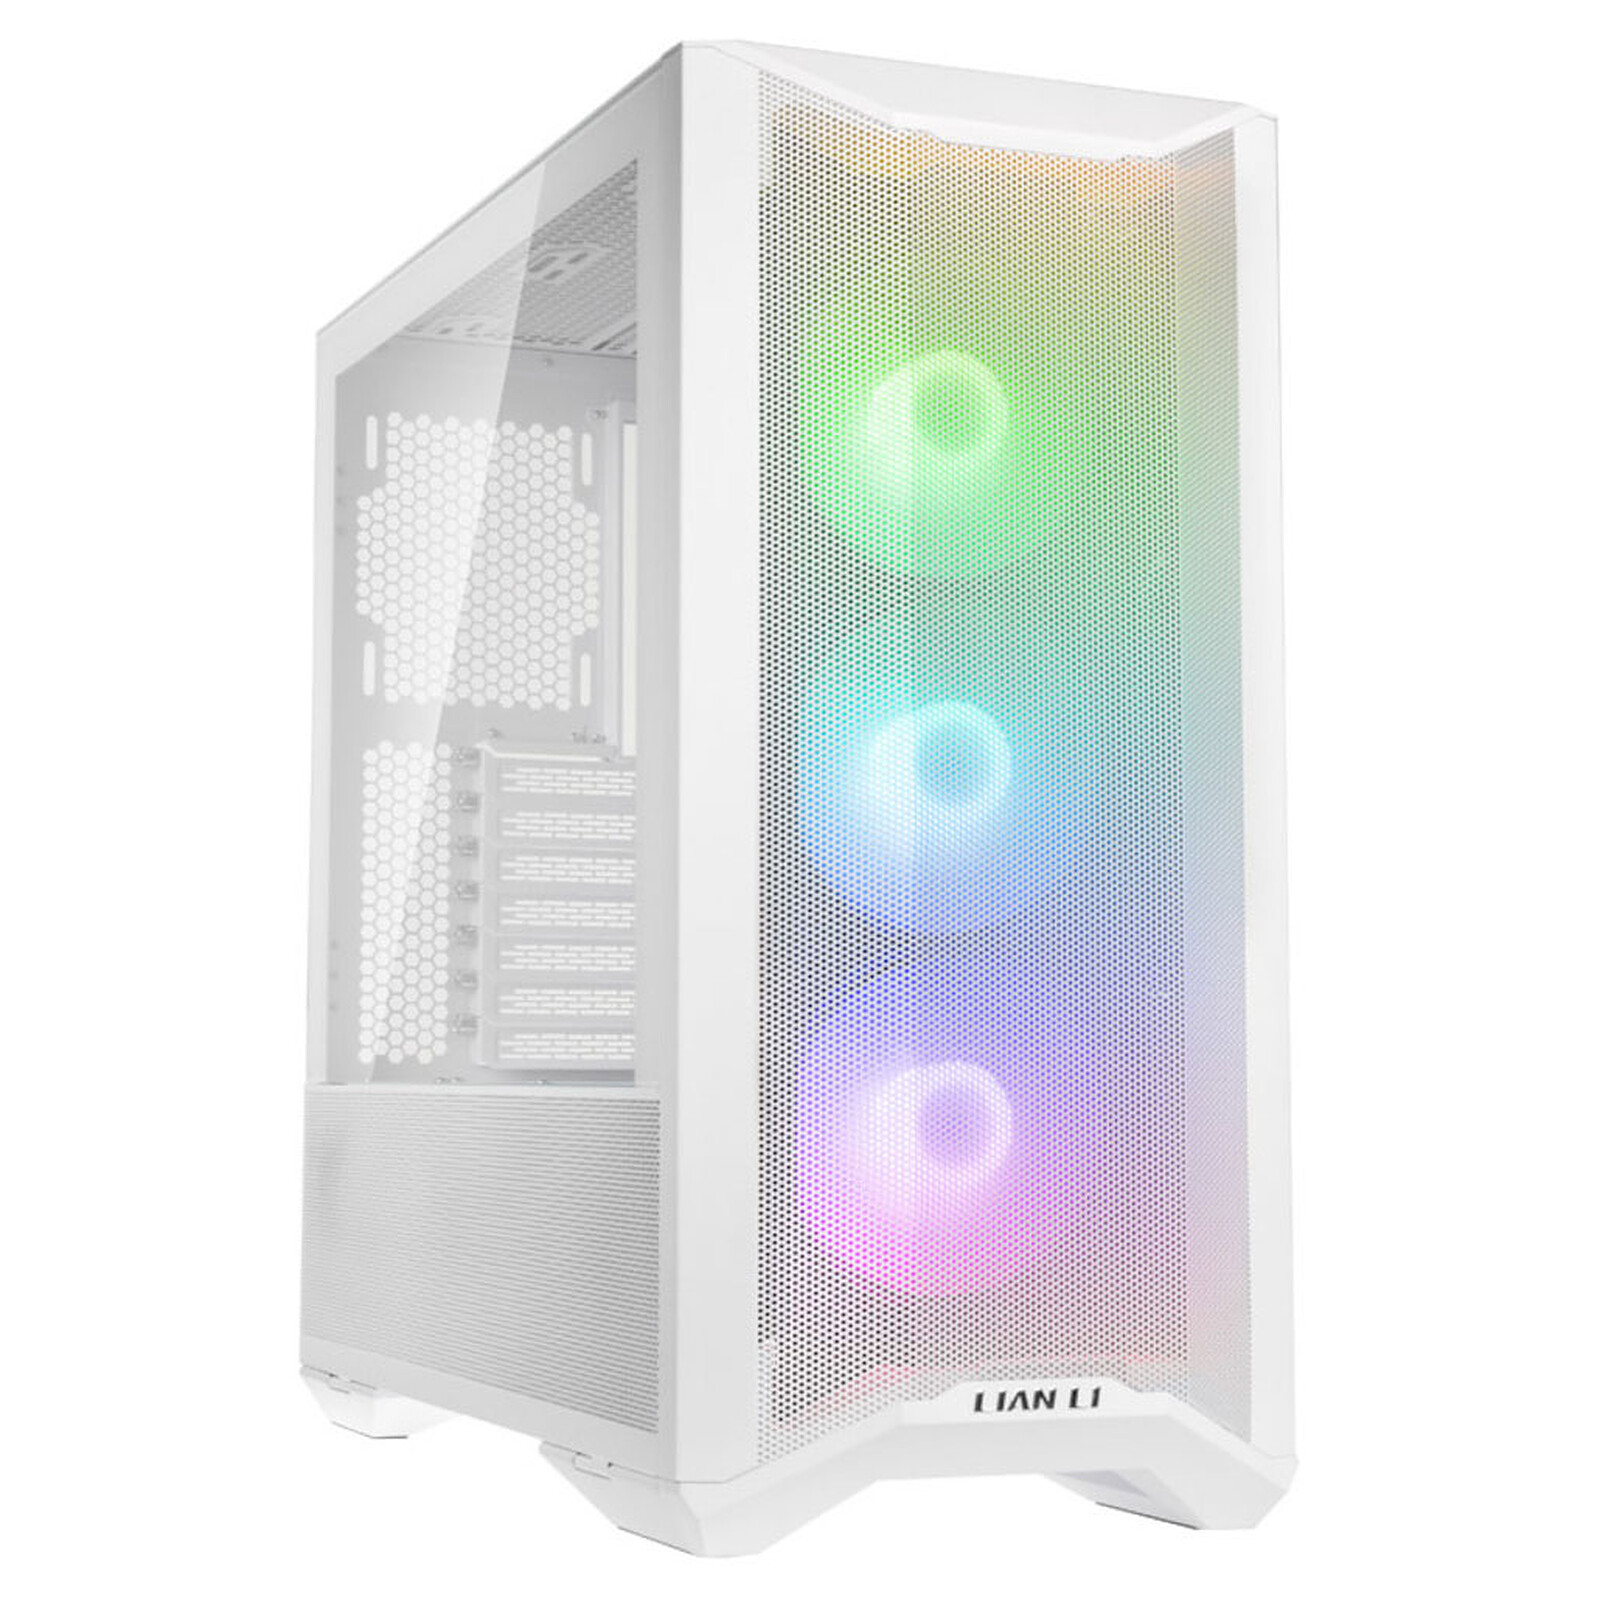 LIAN LI LANCOOL II MESH C RGB SNOW WHITE Tempered Glass ATX Case - White  Color, Type C Included - LANCOOL II MESH C RGB-S